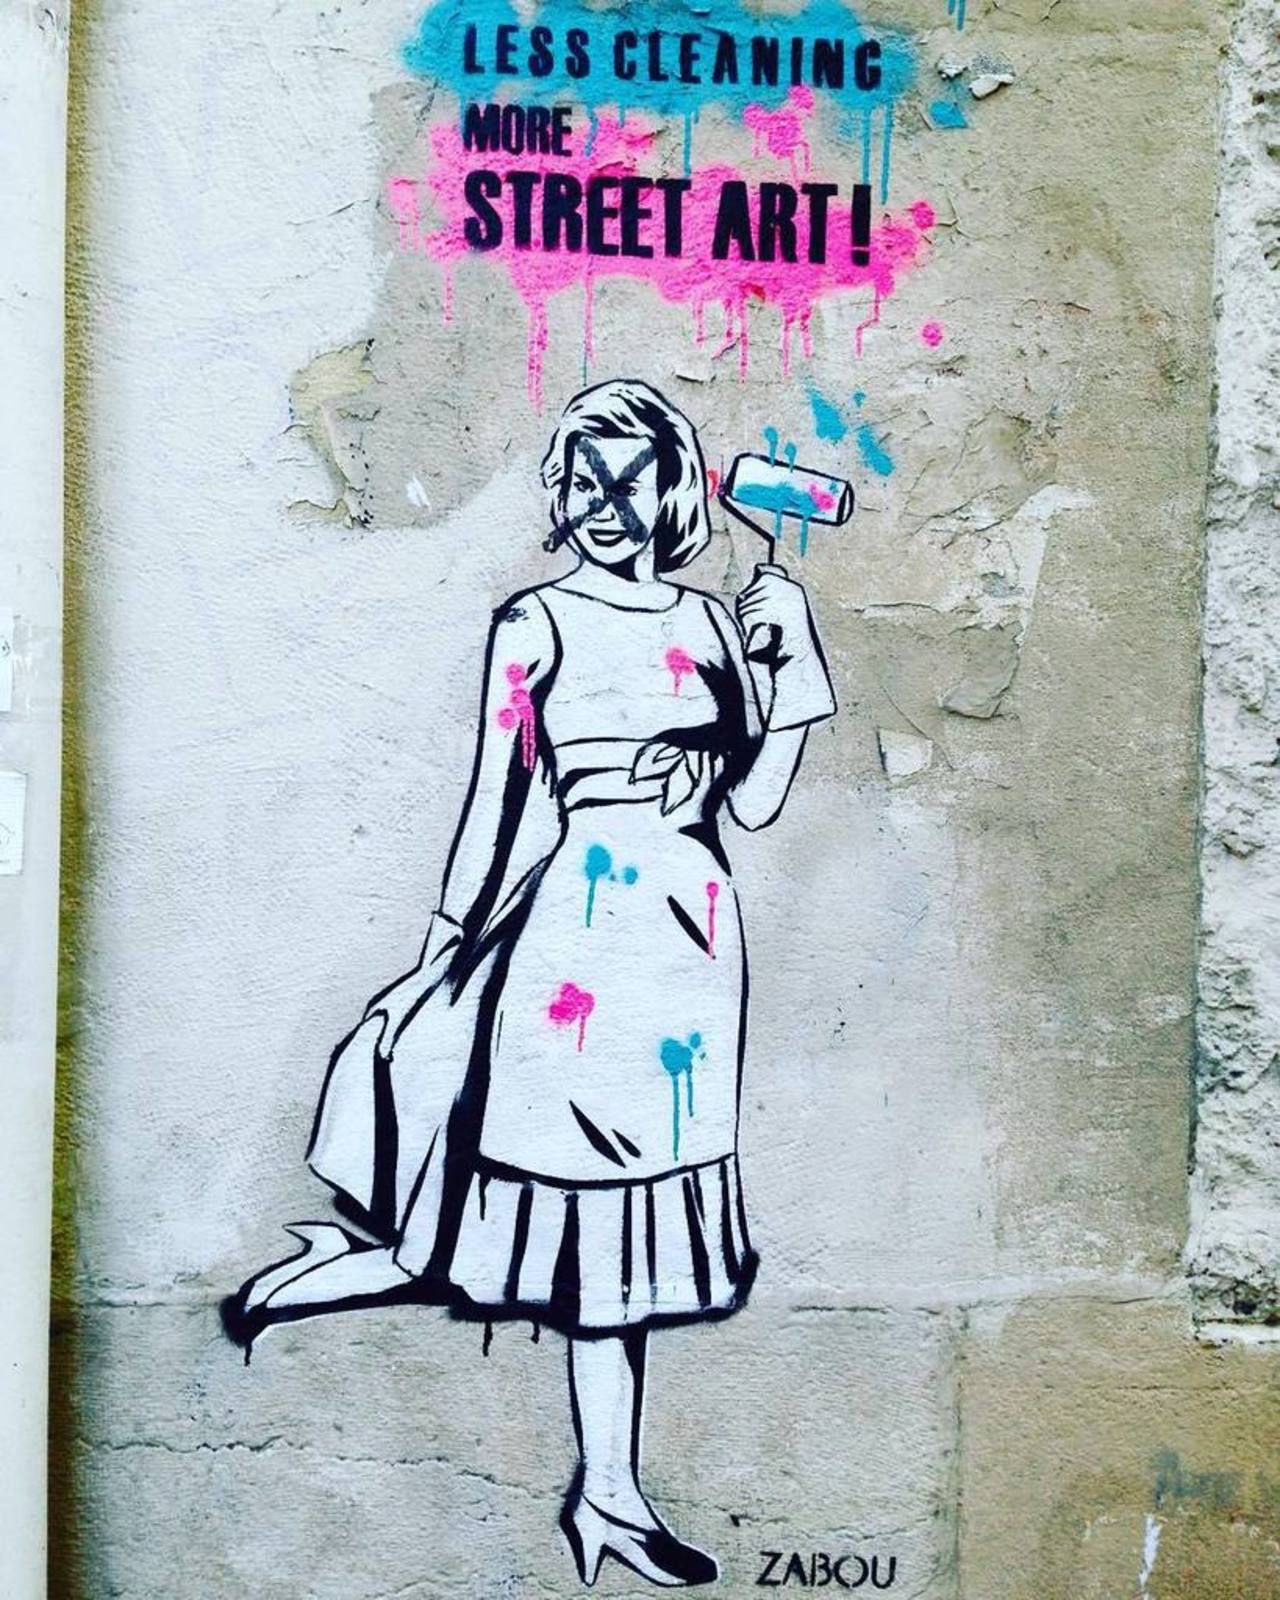 RT @artpushr: via #betty_klik "http://bit.ly/1JWHGLq" #graffiti #streetart http://t.co/aGxEbDgARl